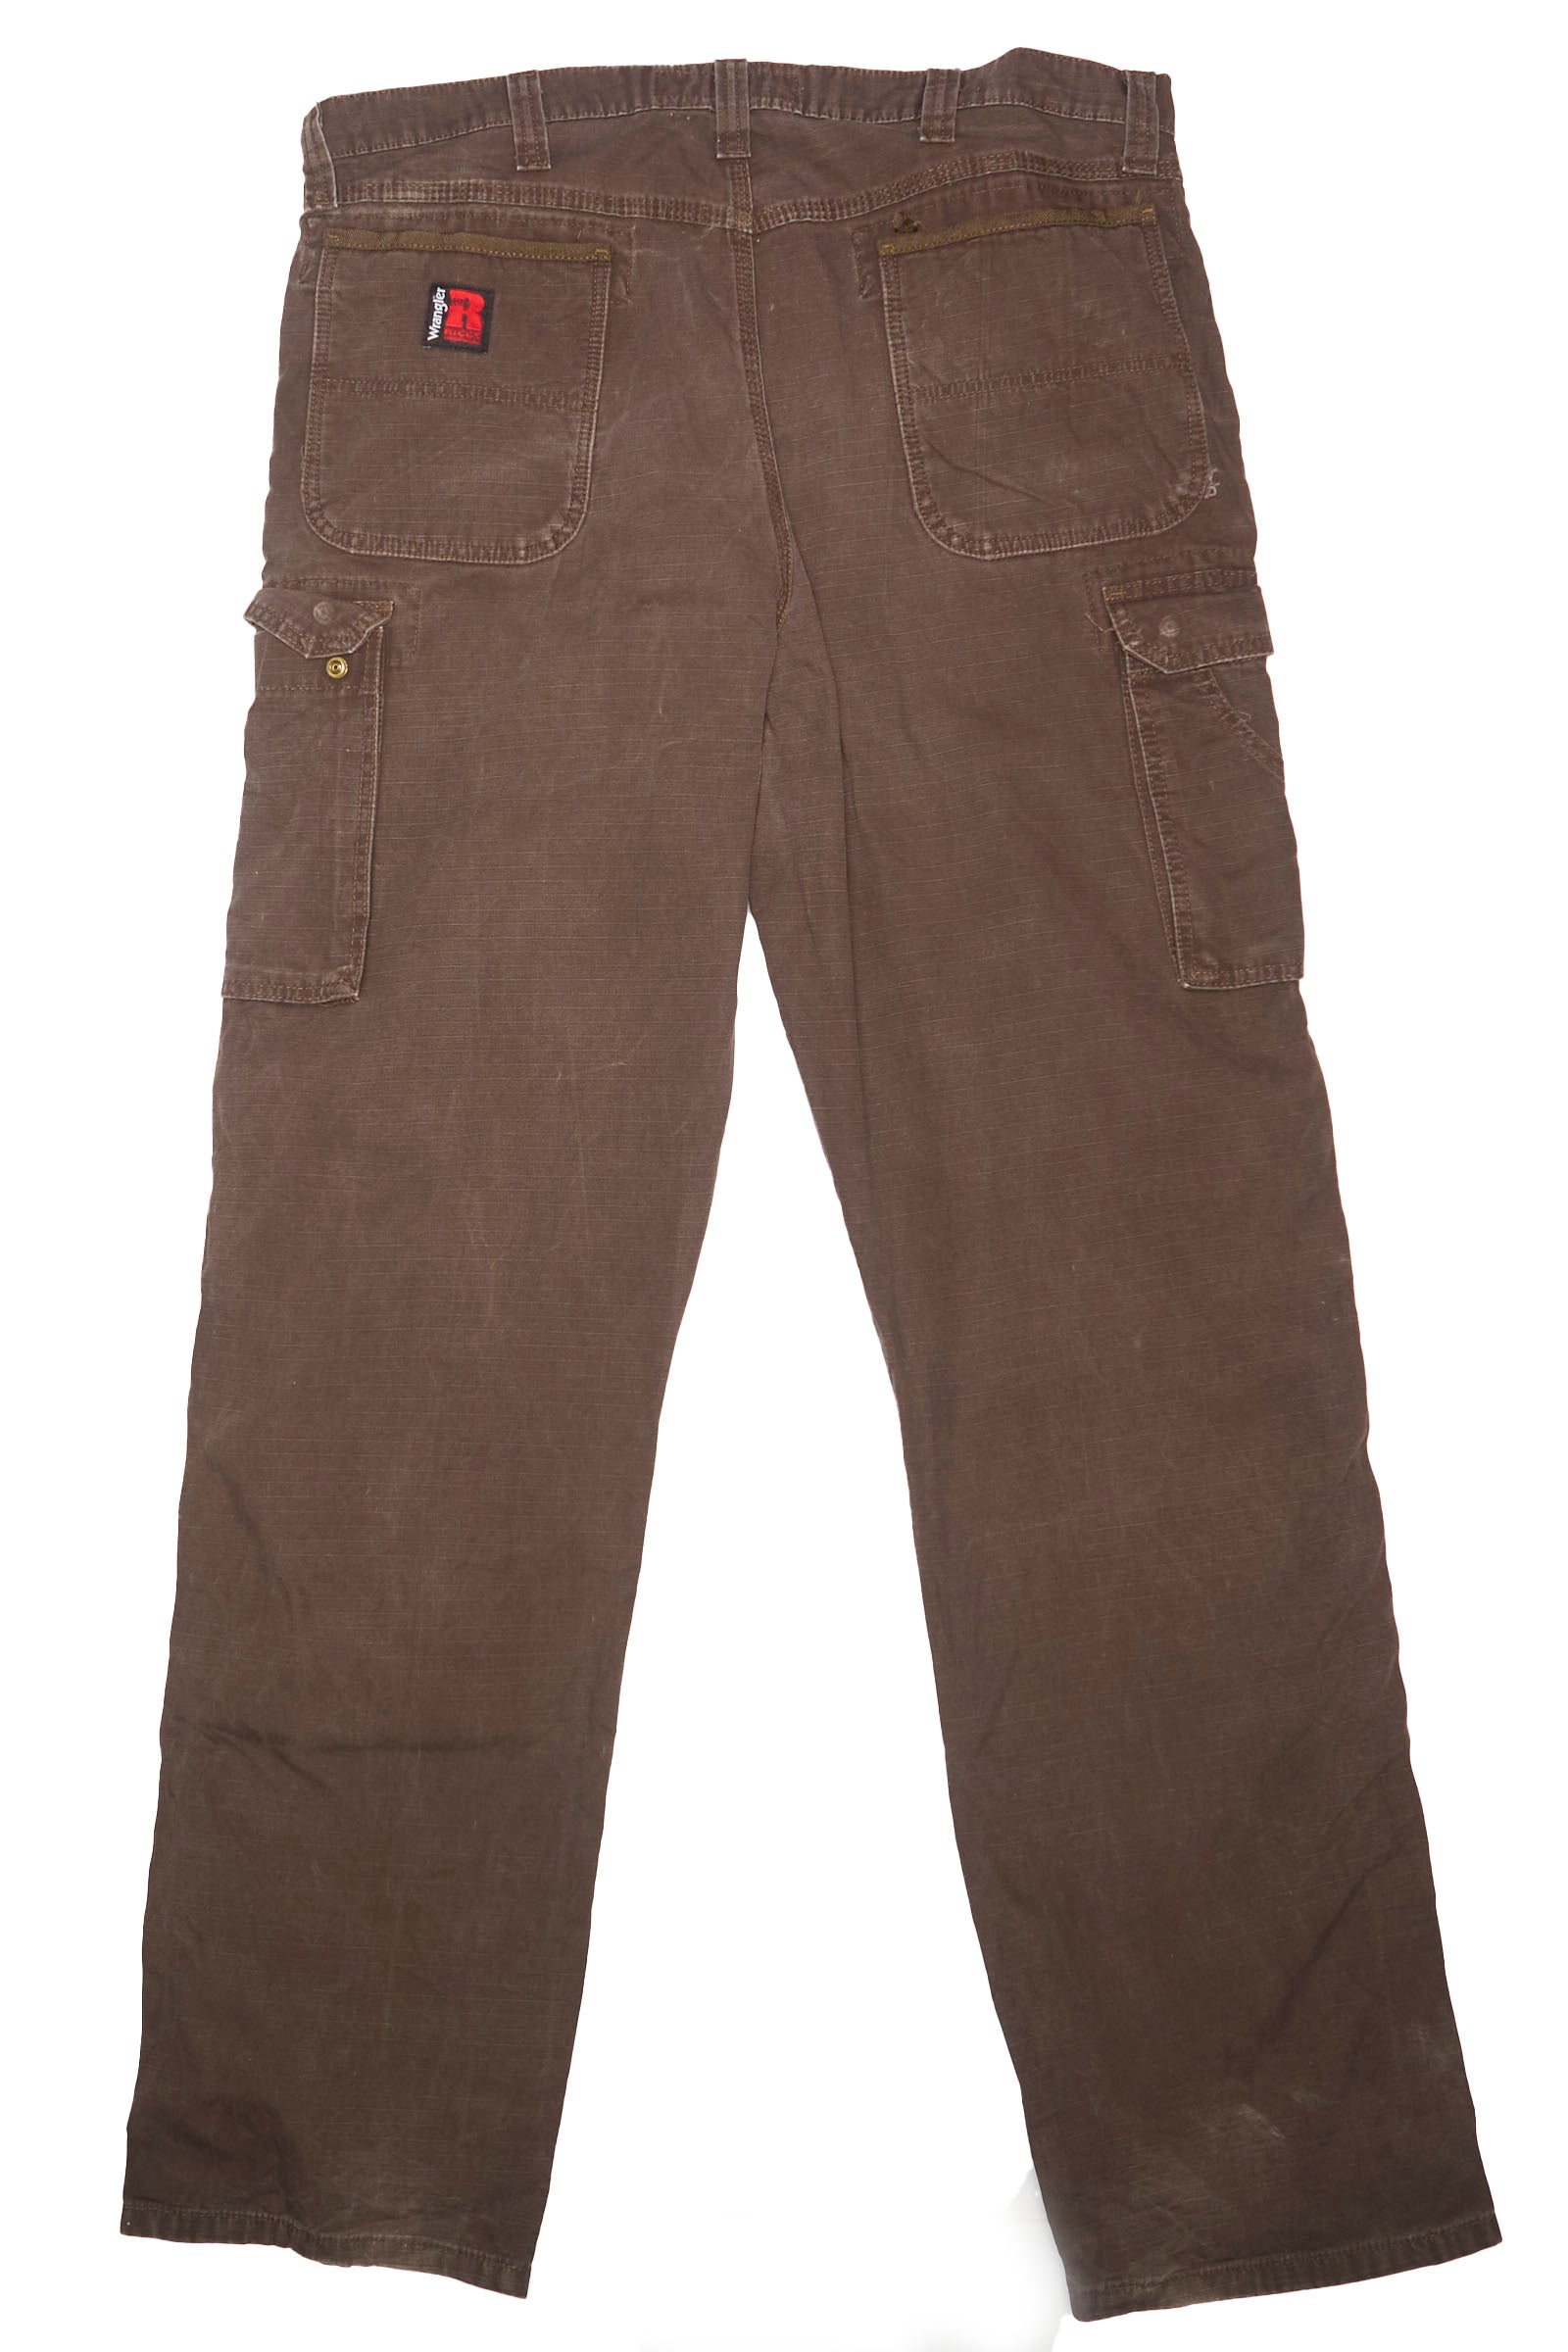 WRANGLER Men ARIZONA Regular Straight Pants Trousers Size W36 L30 | eBay